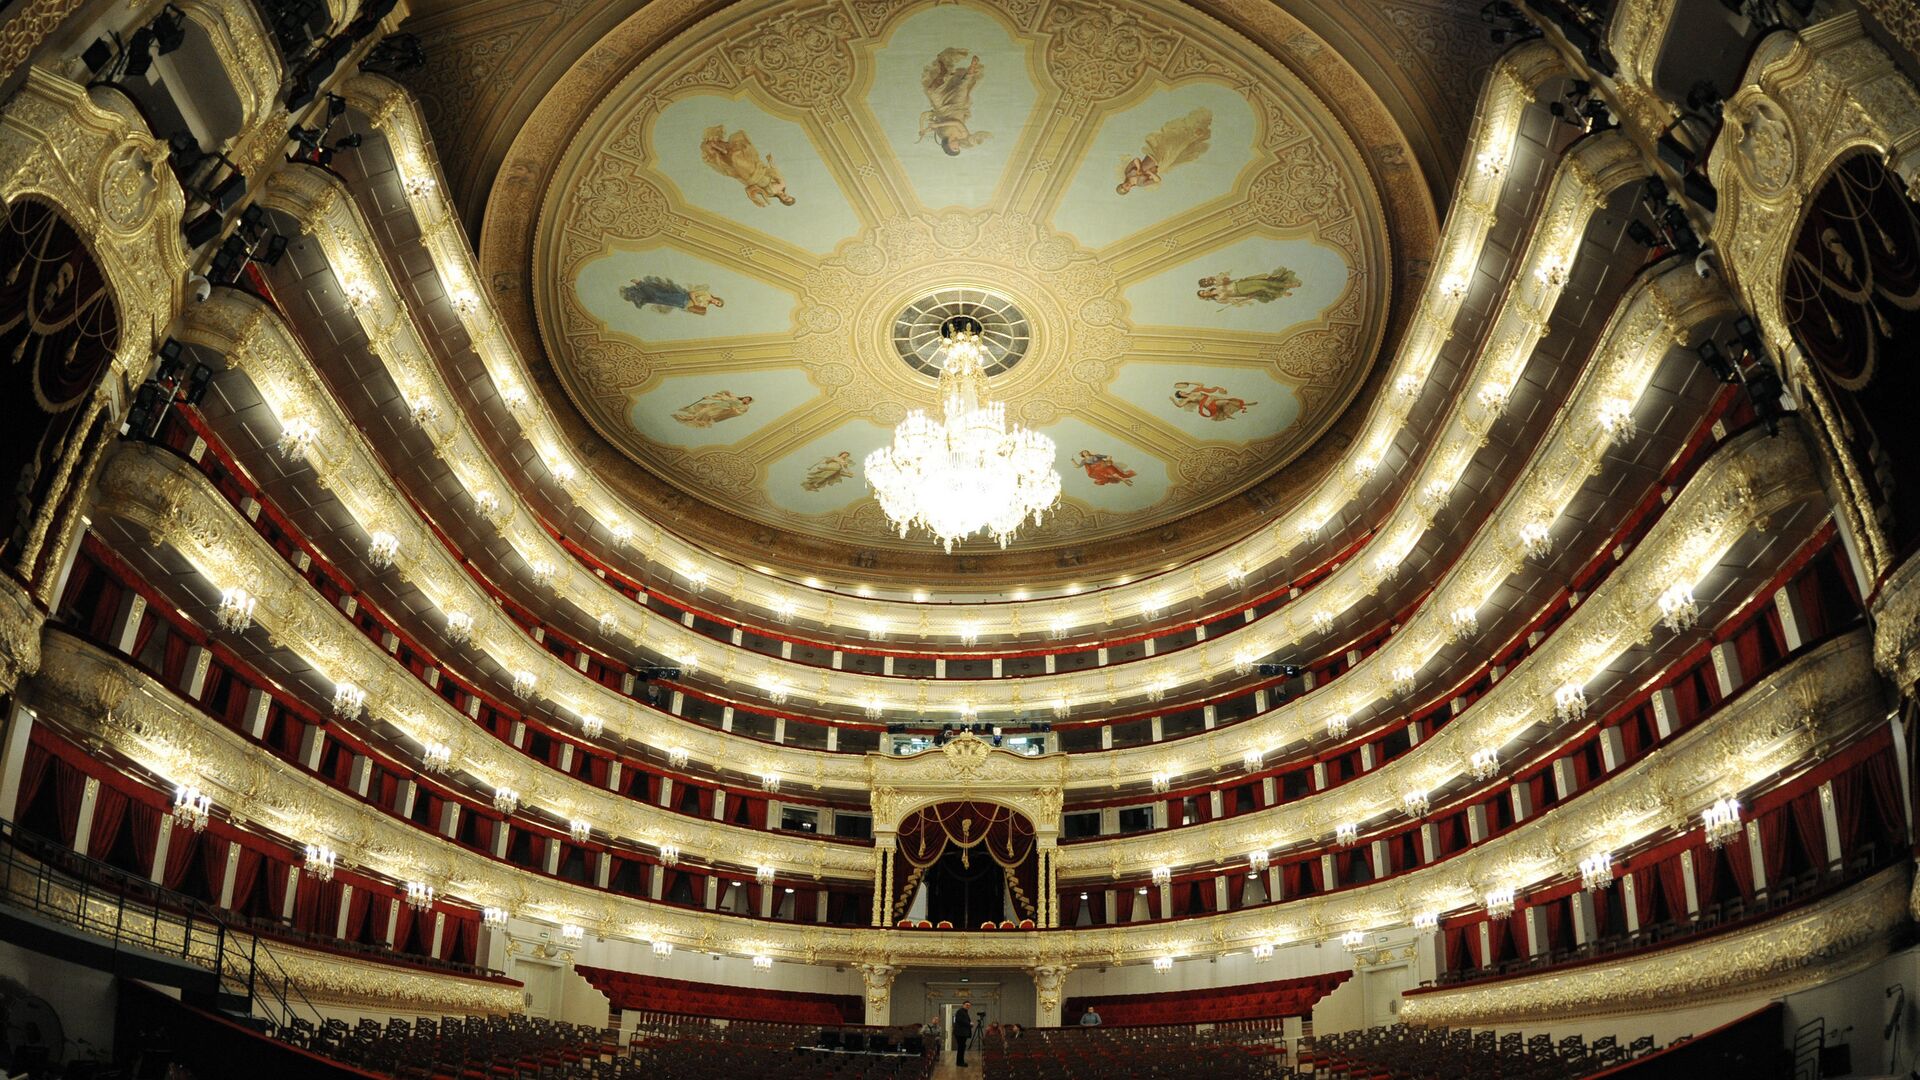 Театр имени пушкина москва фото зала